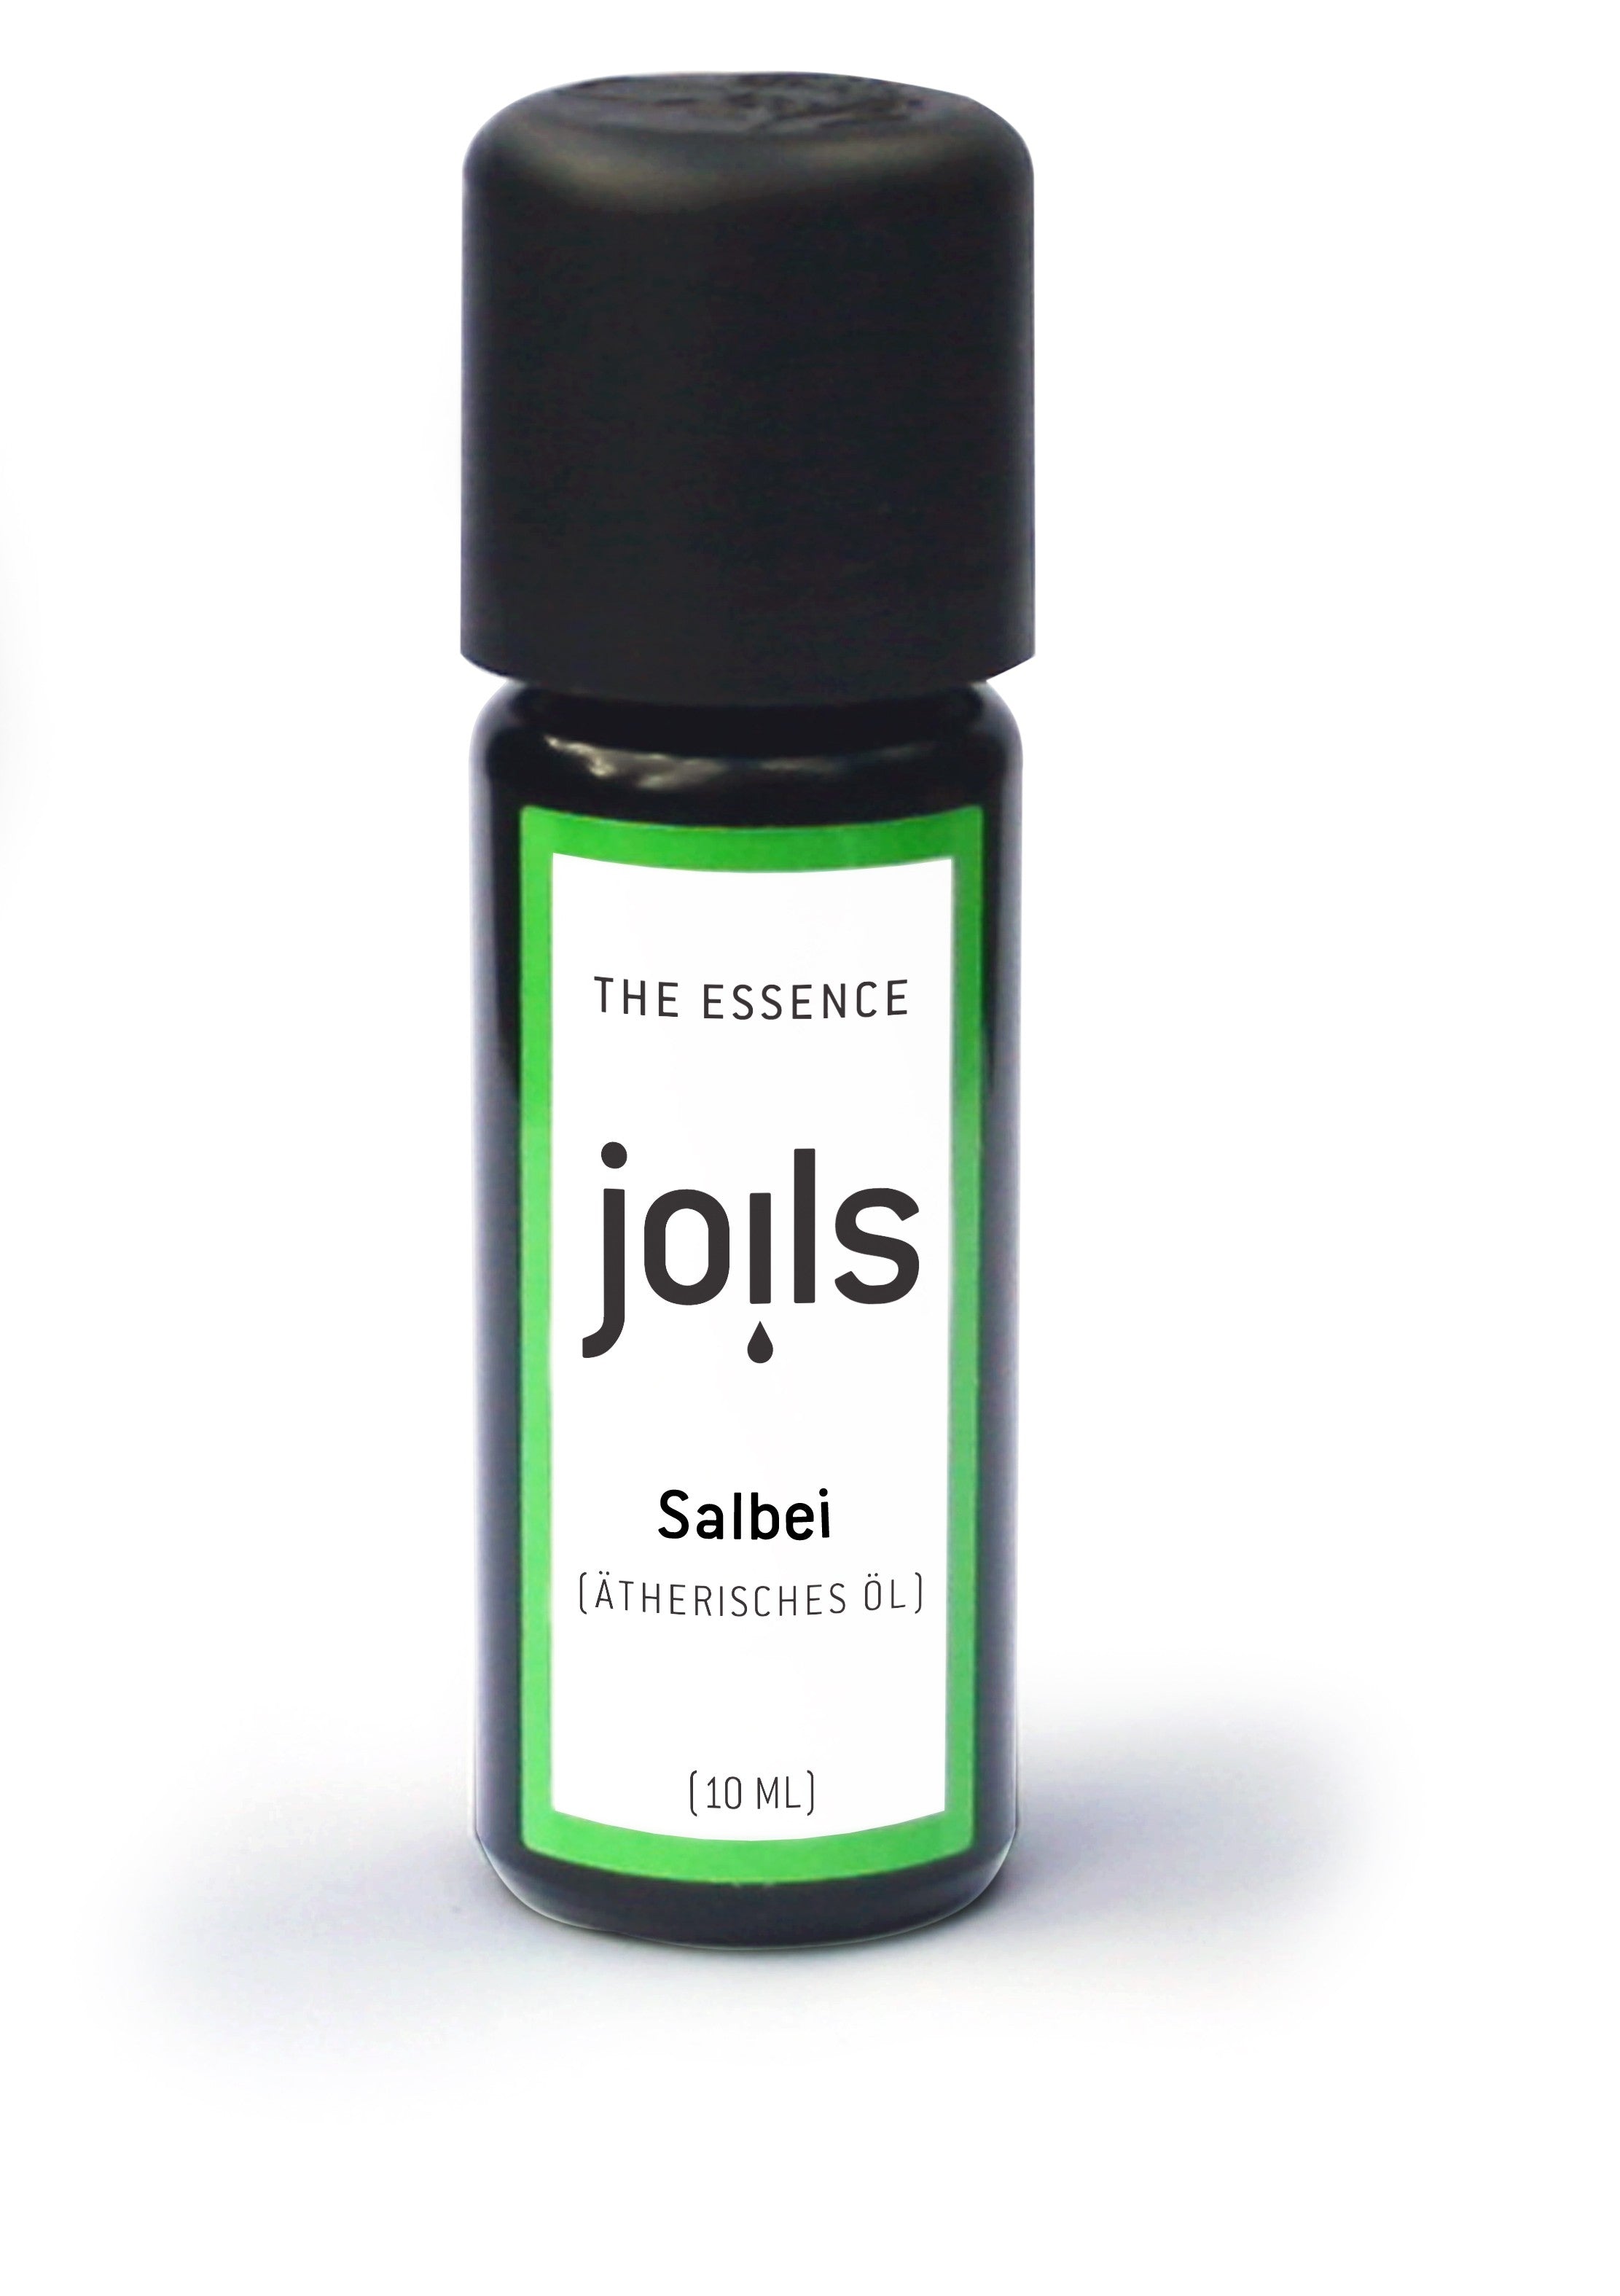 SALBEI 10ml - Joils